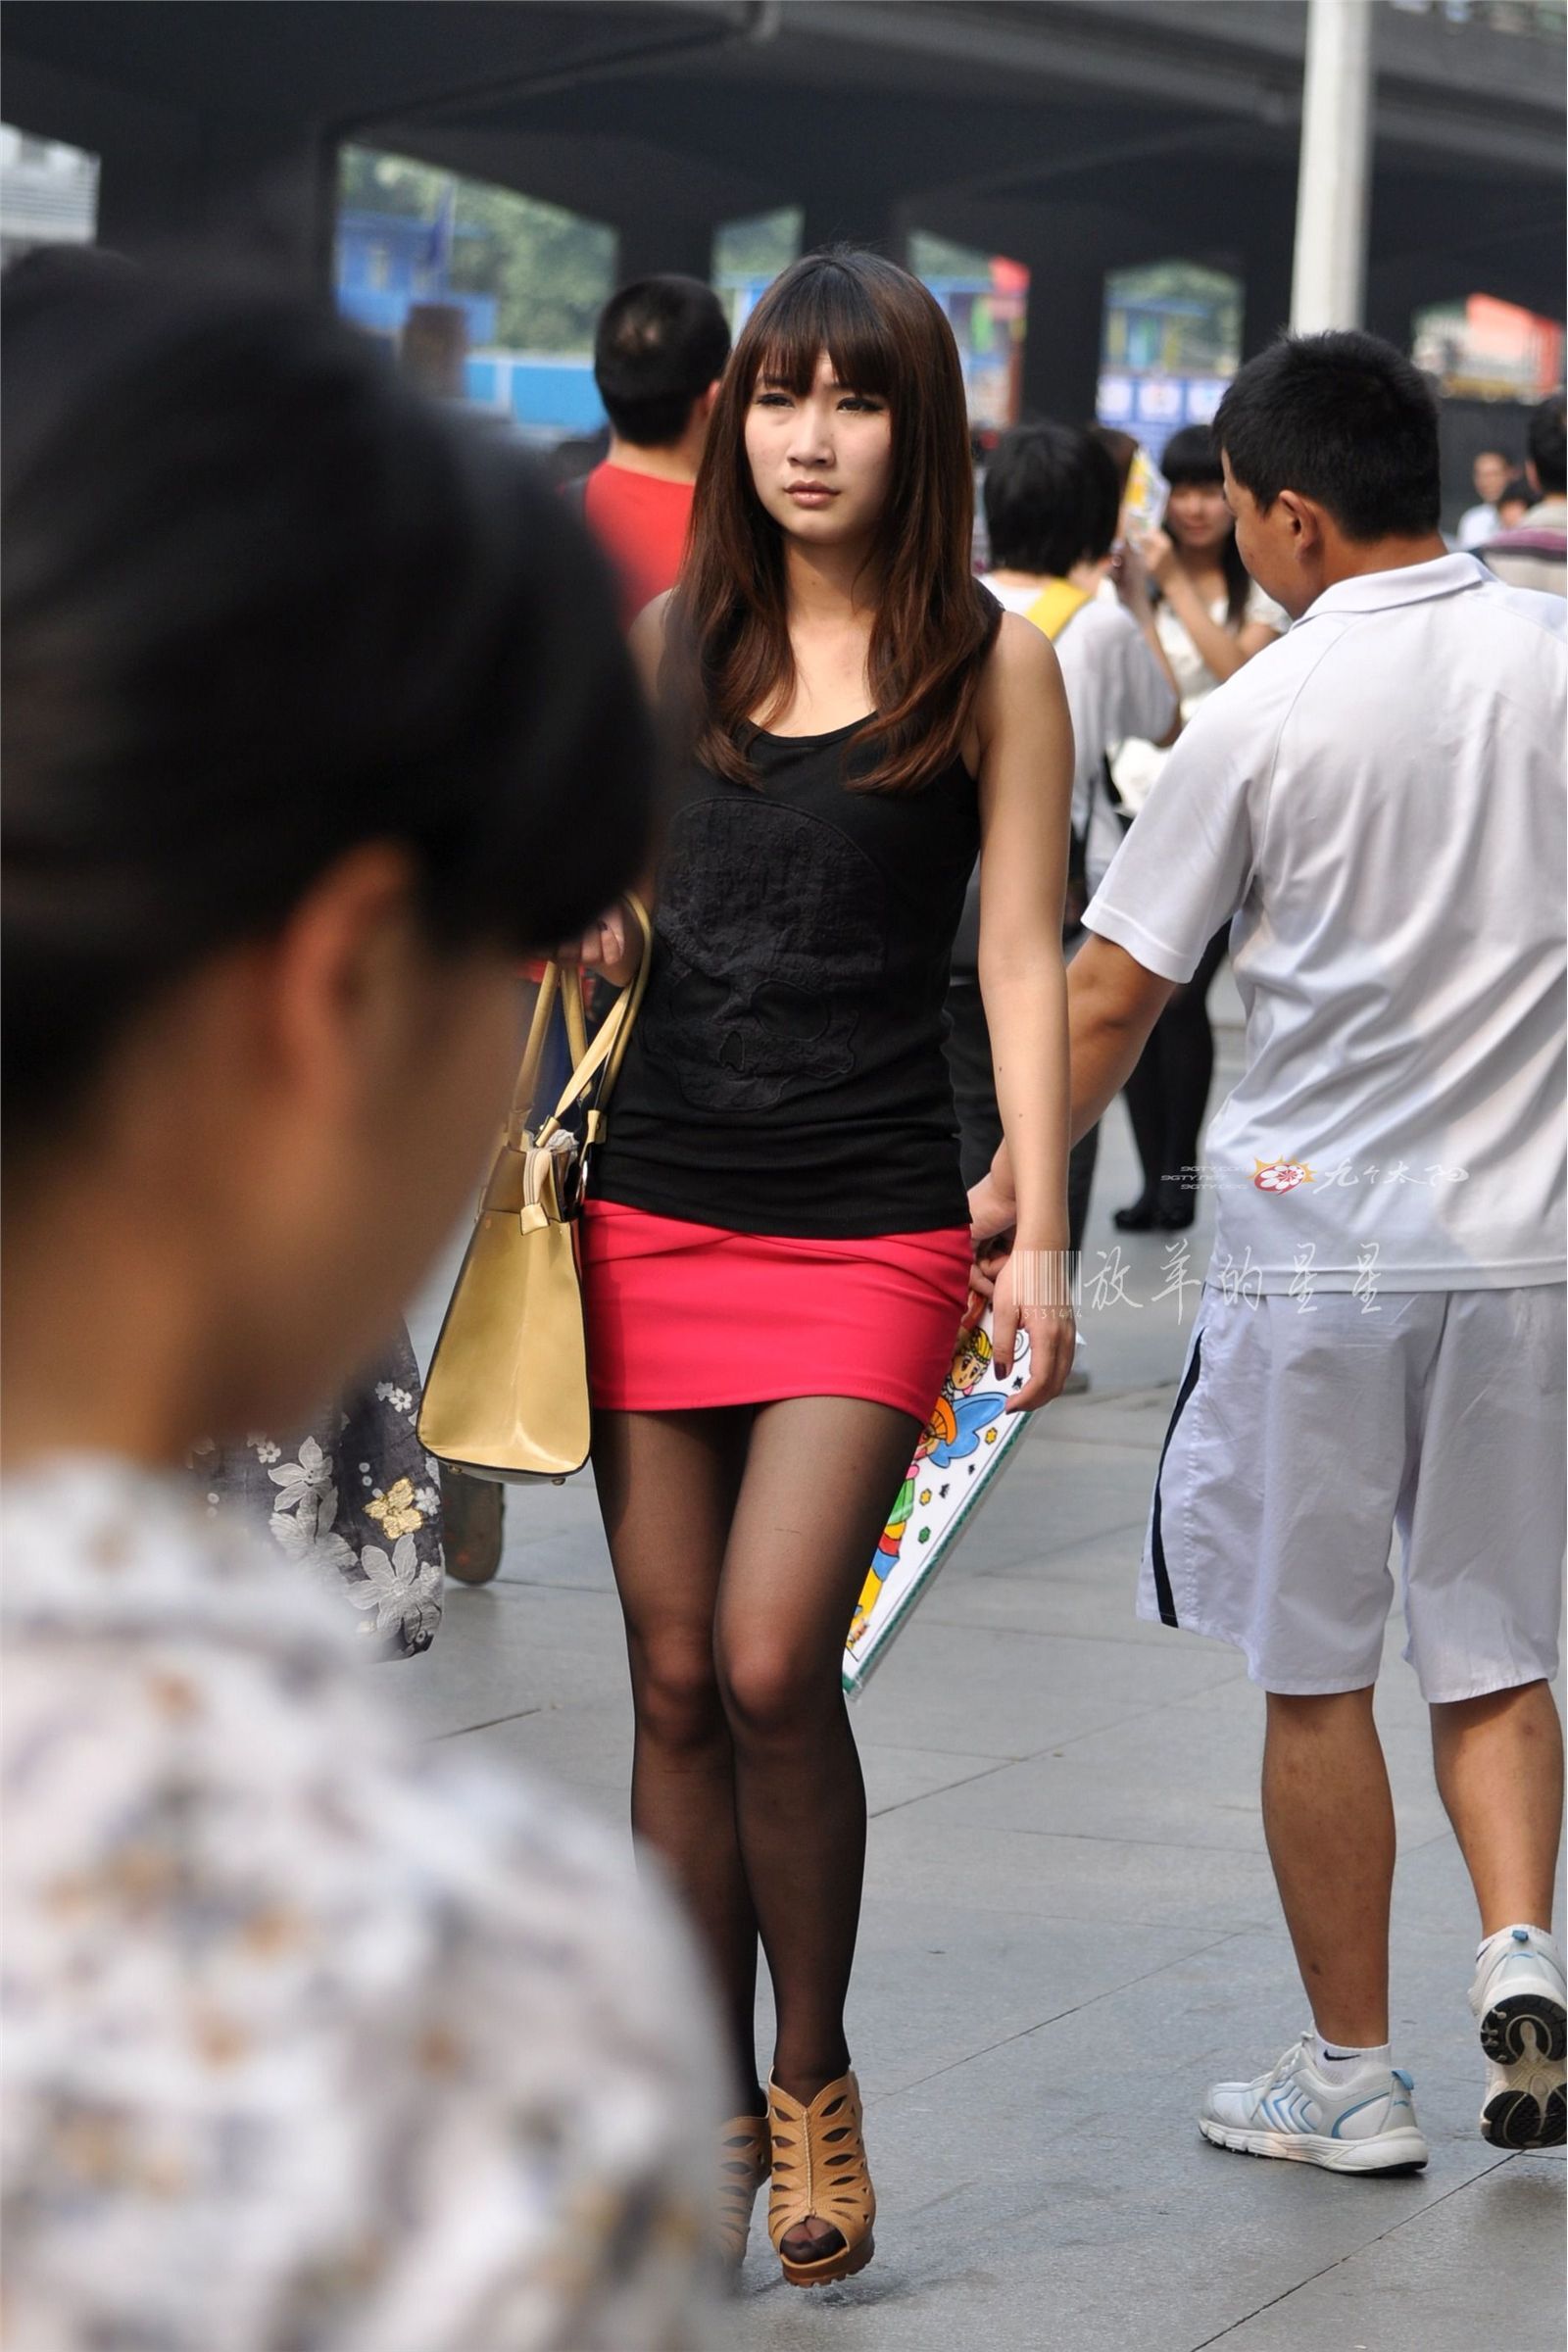 MM的红裙黑丝美腿看起来相当养眼